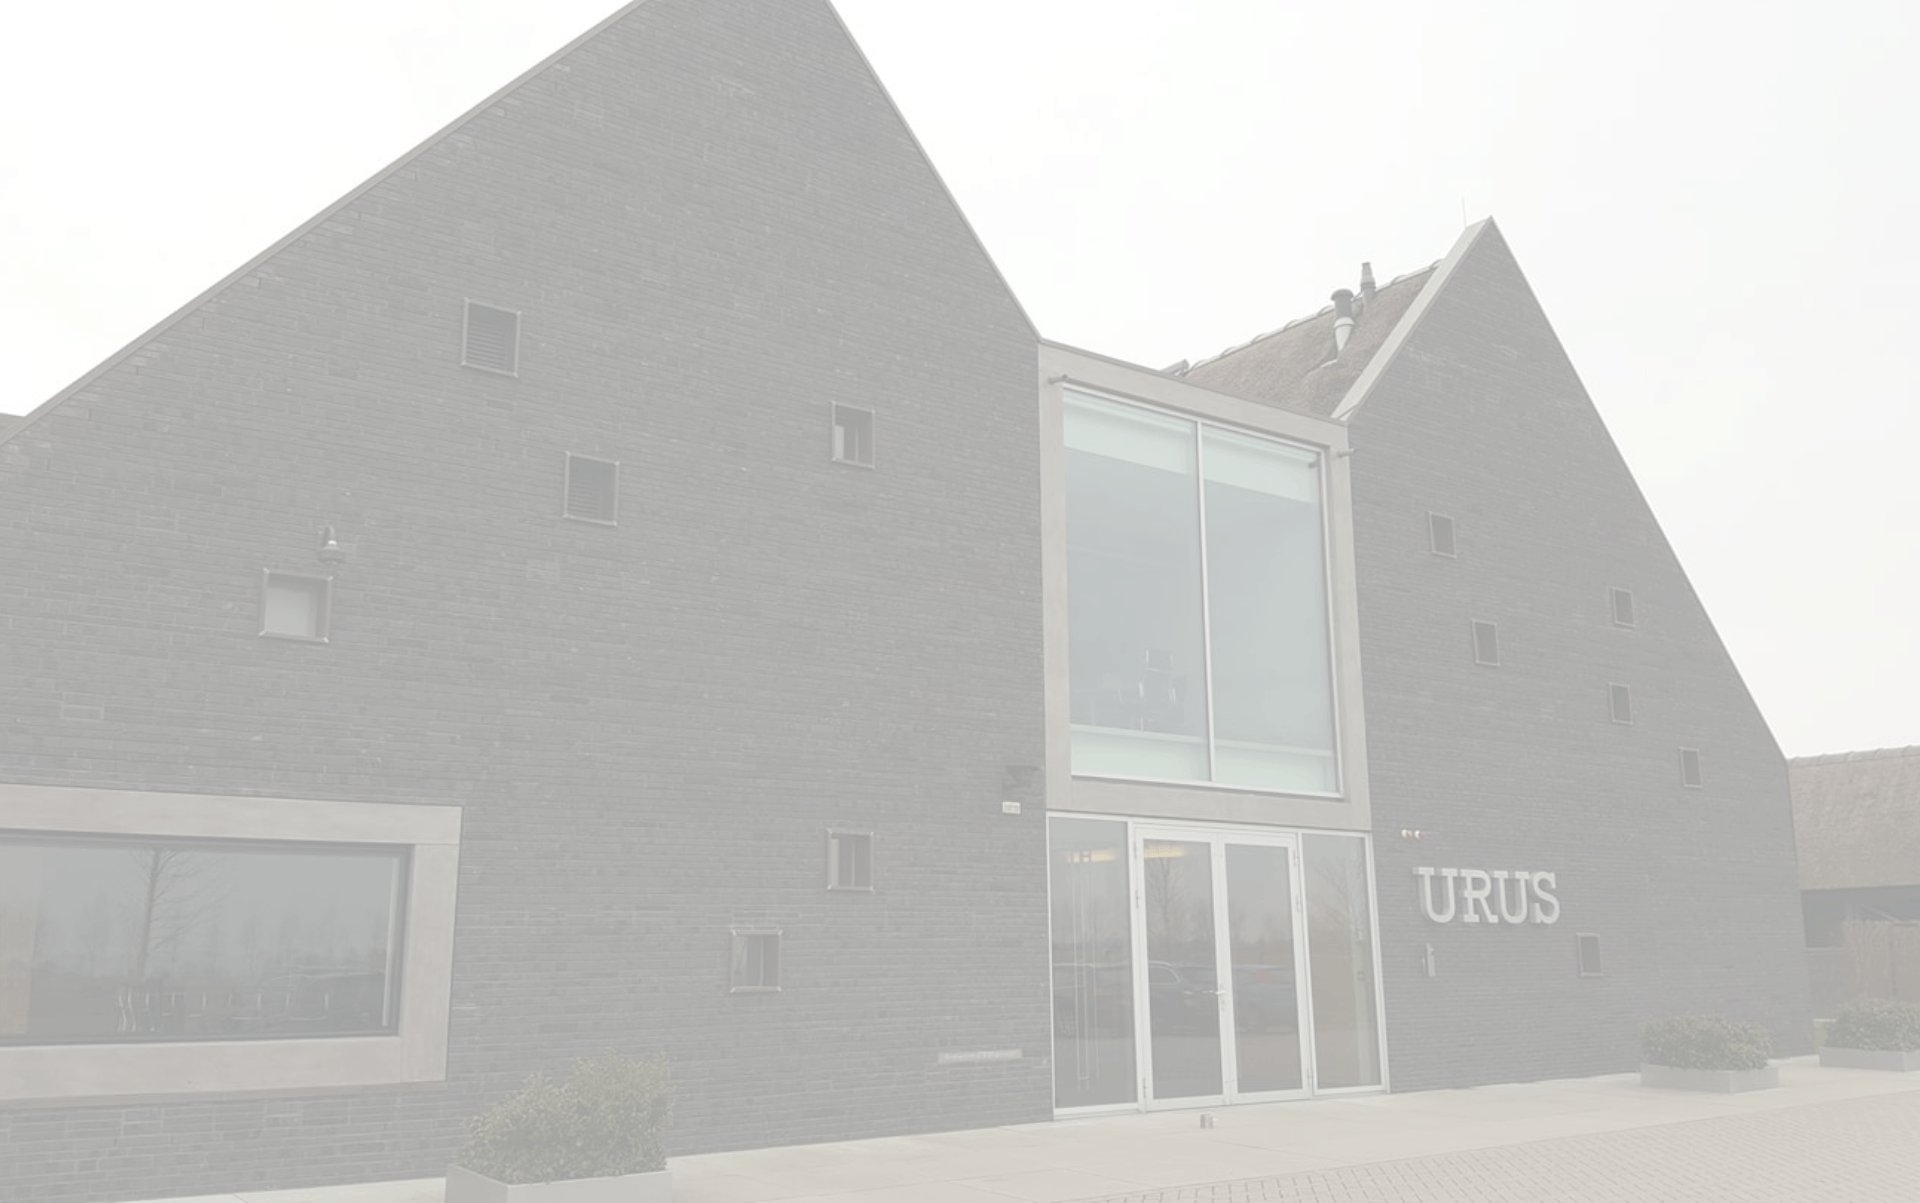 Urus office building outside